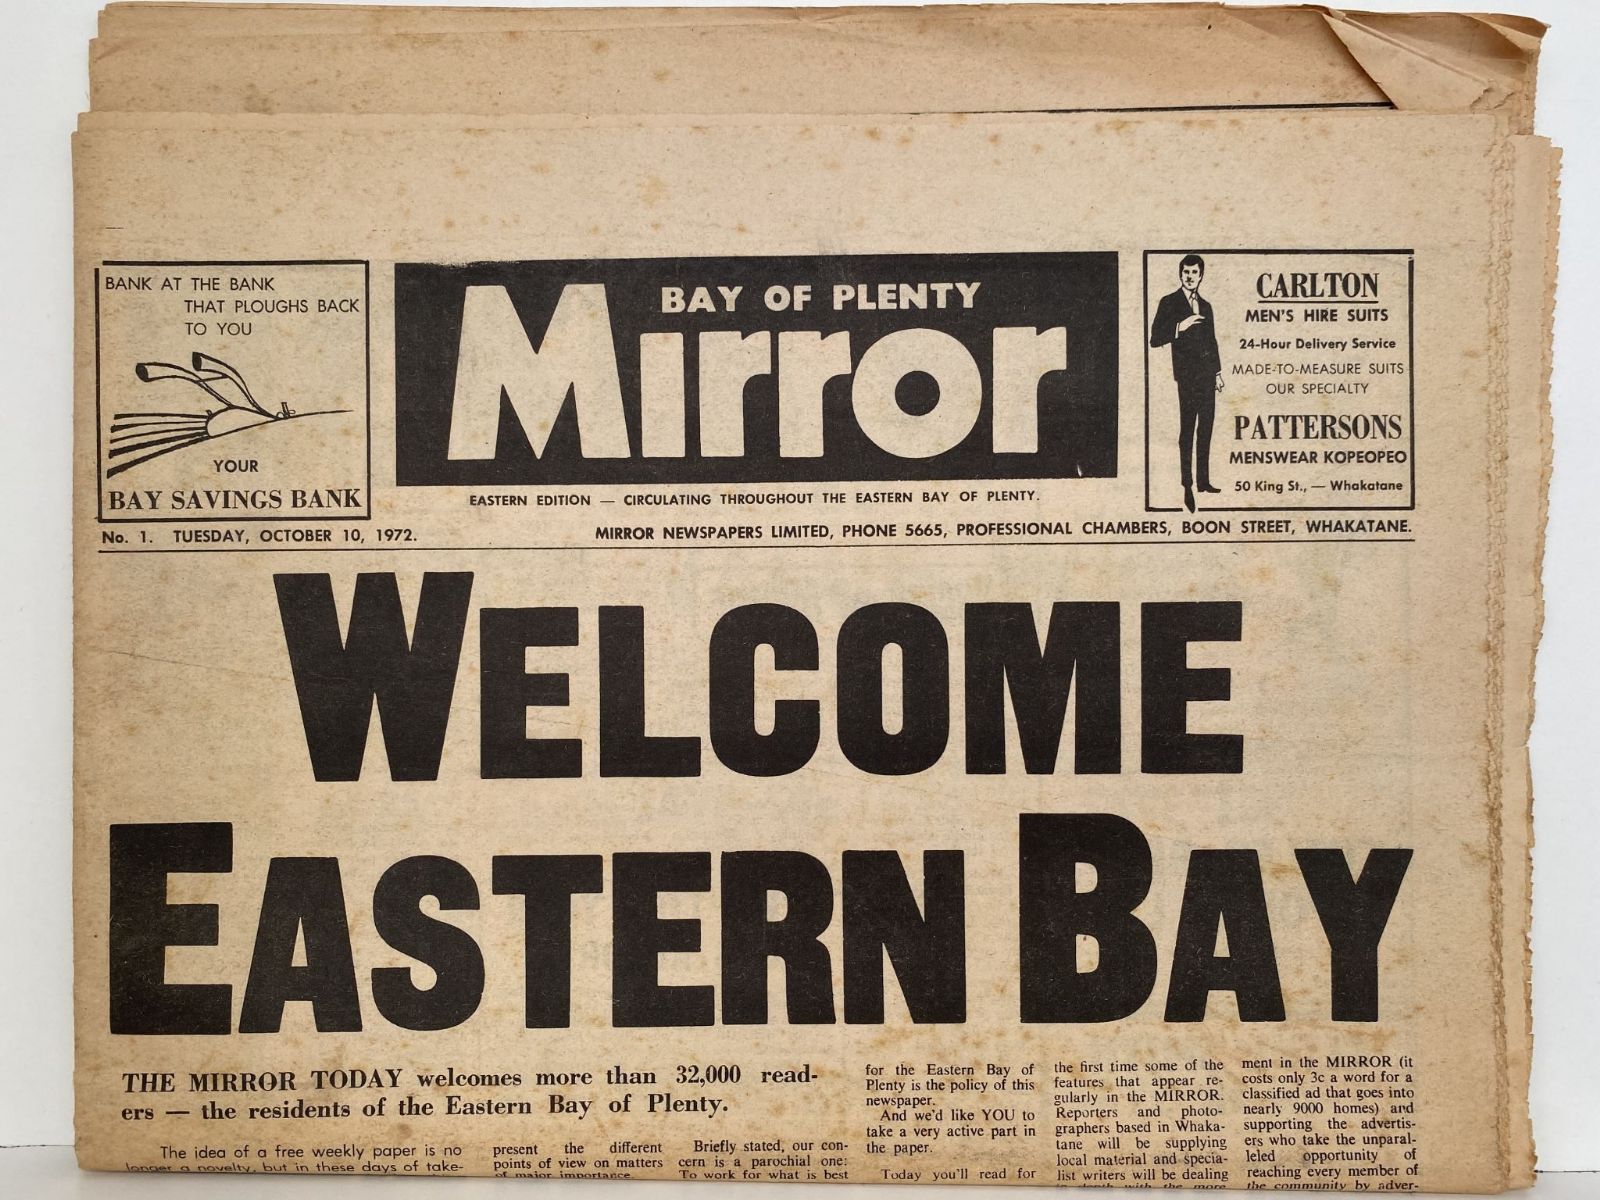 OLD NEWSPAPER: Bay of Plenty Mirror, Eastern Bay of Plenty, 10 October 1972